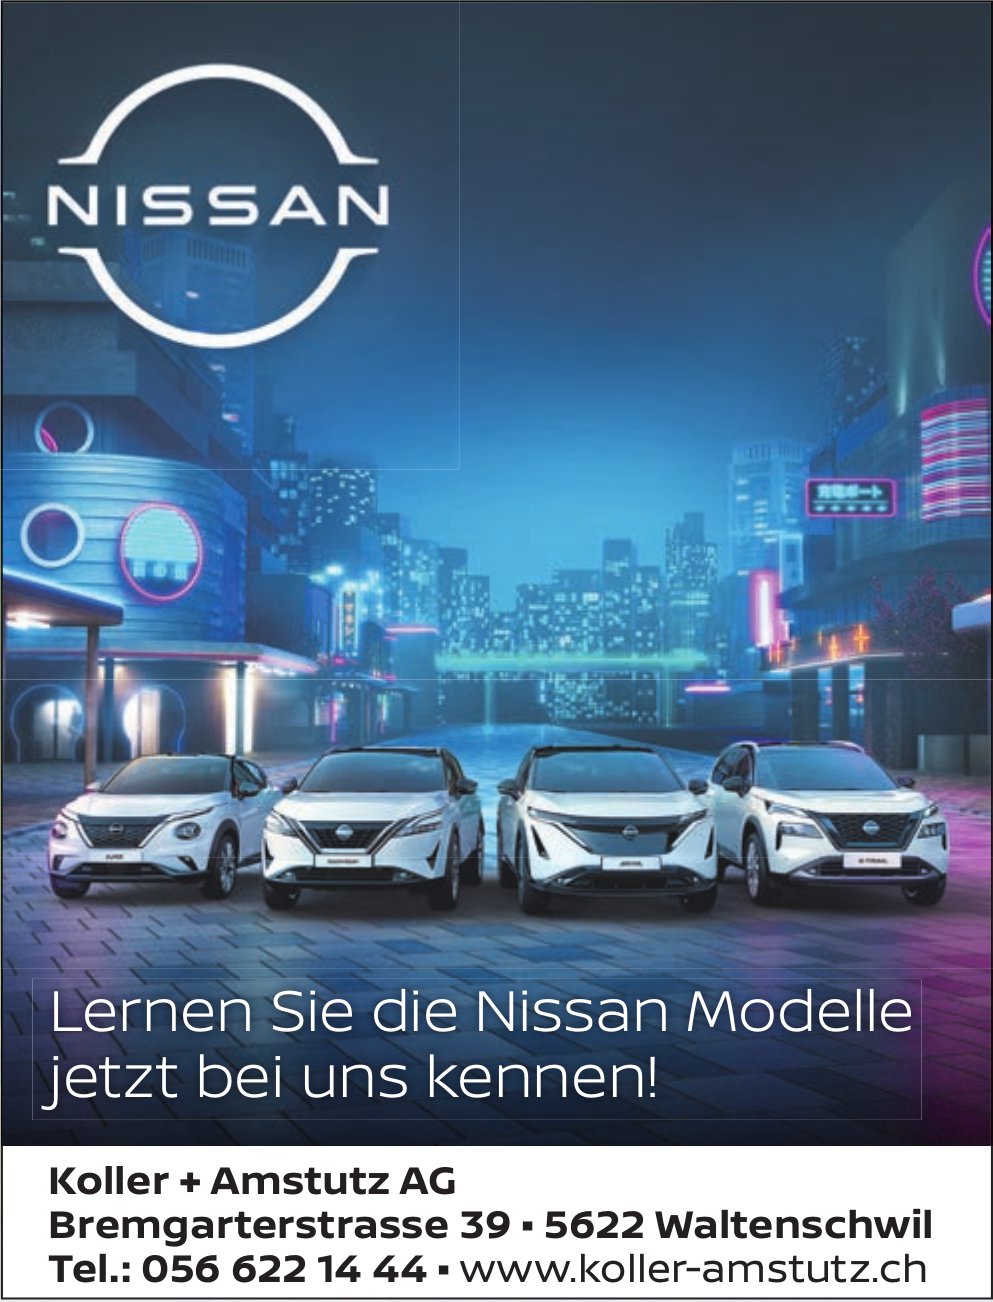 Koller + Amstutz AG, Waltenschwil - Nissan Modelle